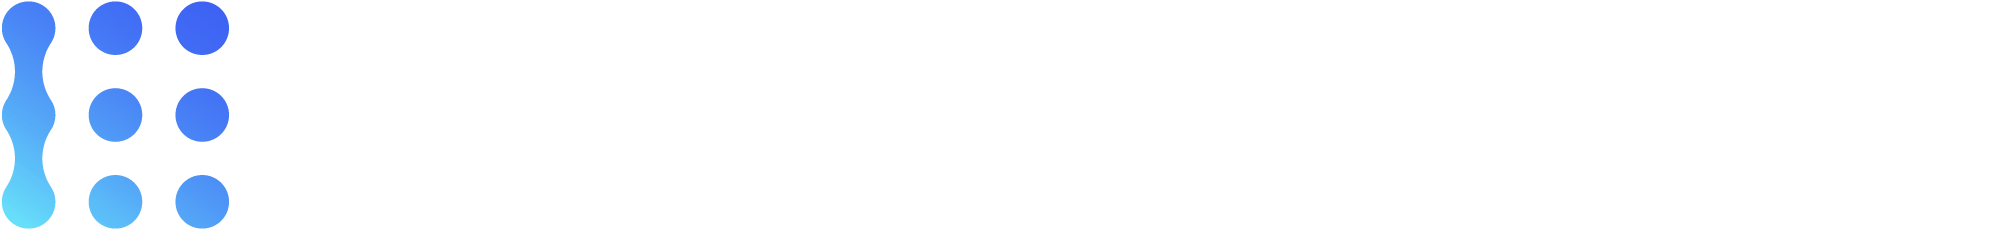 Bluewire-Logo-Lockup-Full-Color-RGB 